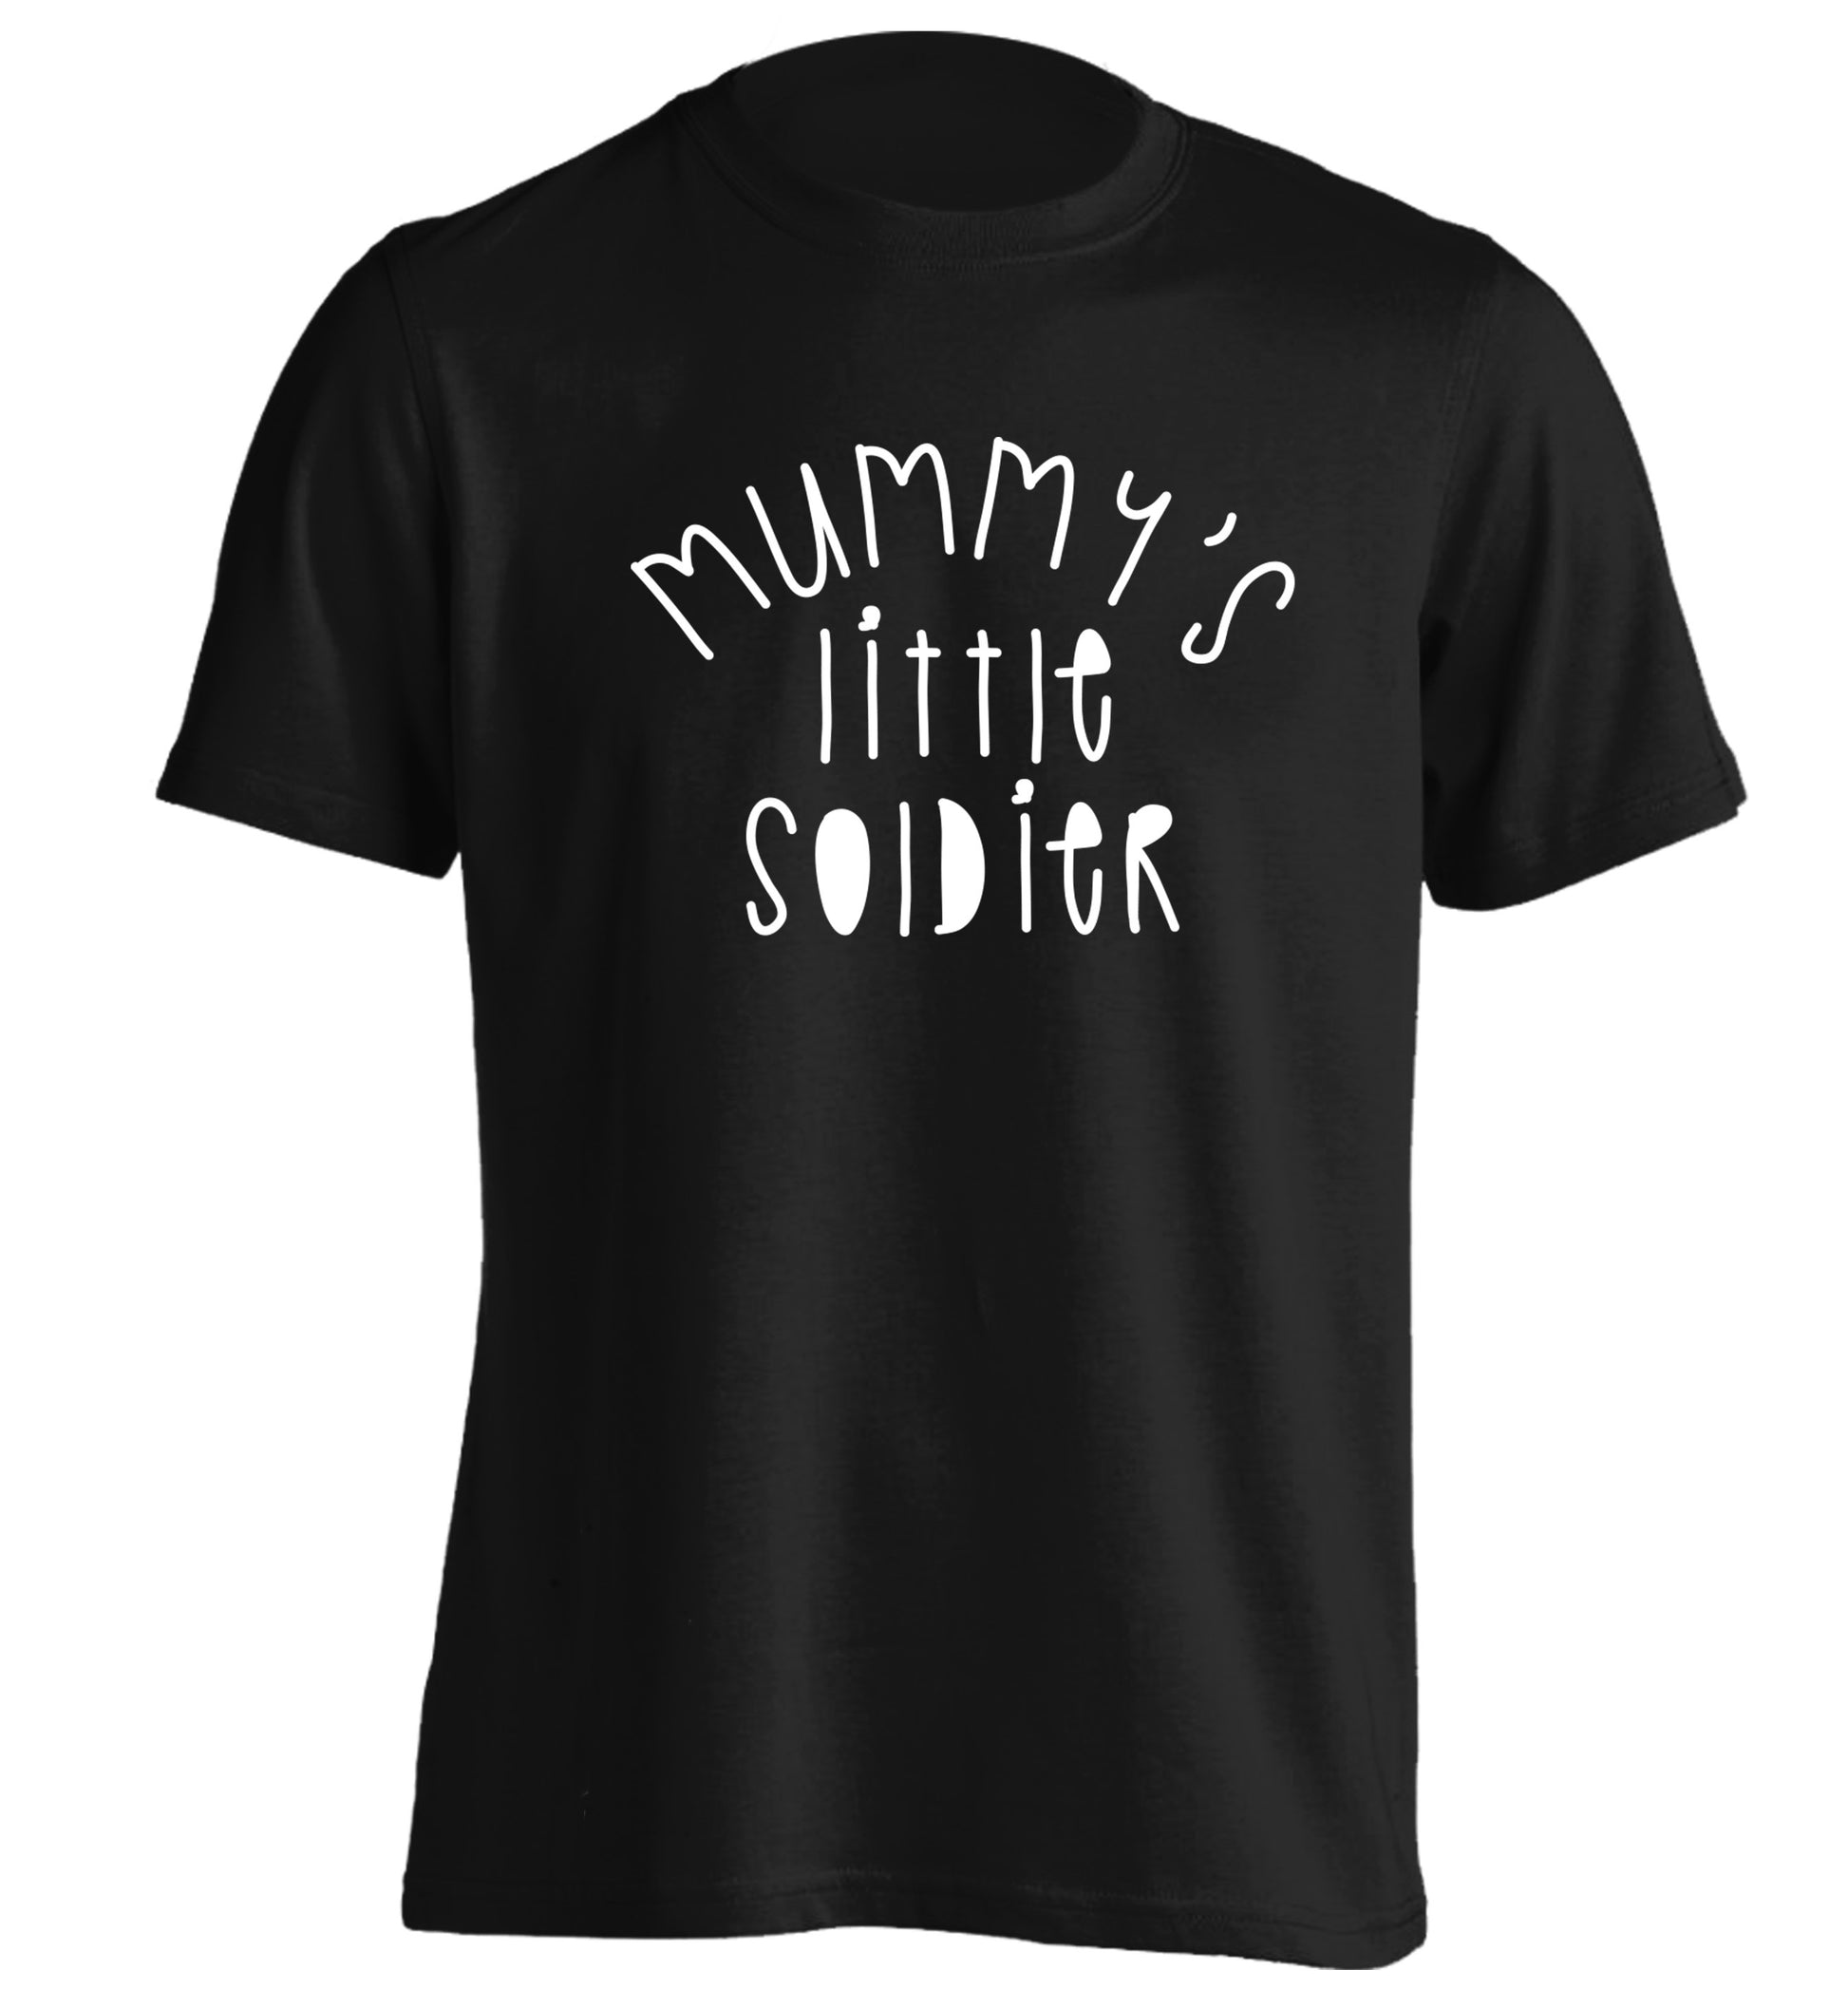 Mummy's little soldier adults unisex black Tshirt 2XL